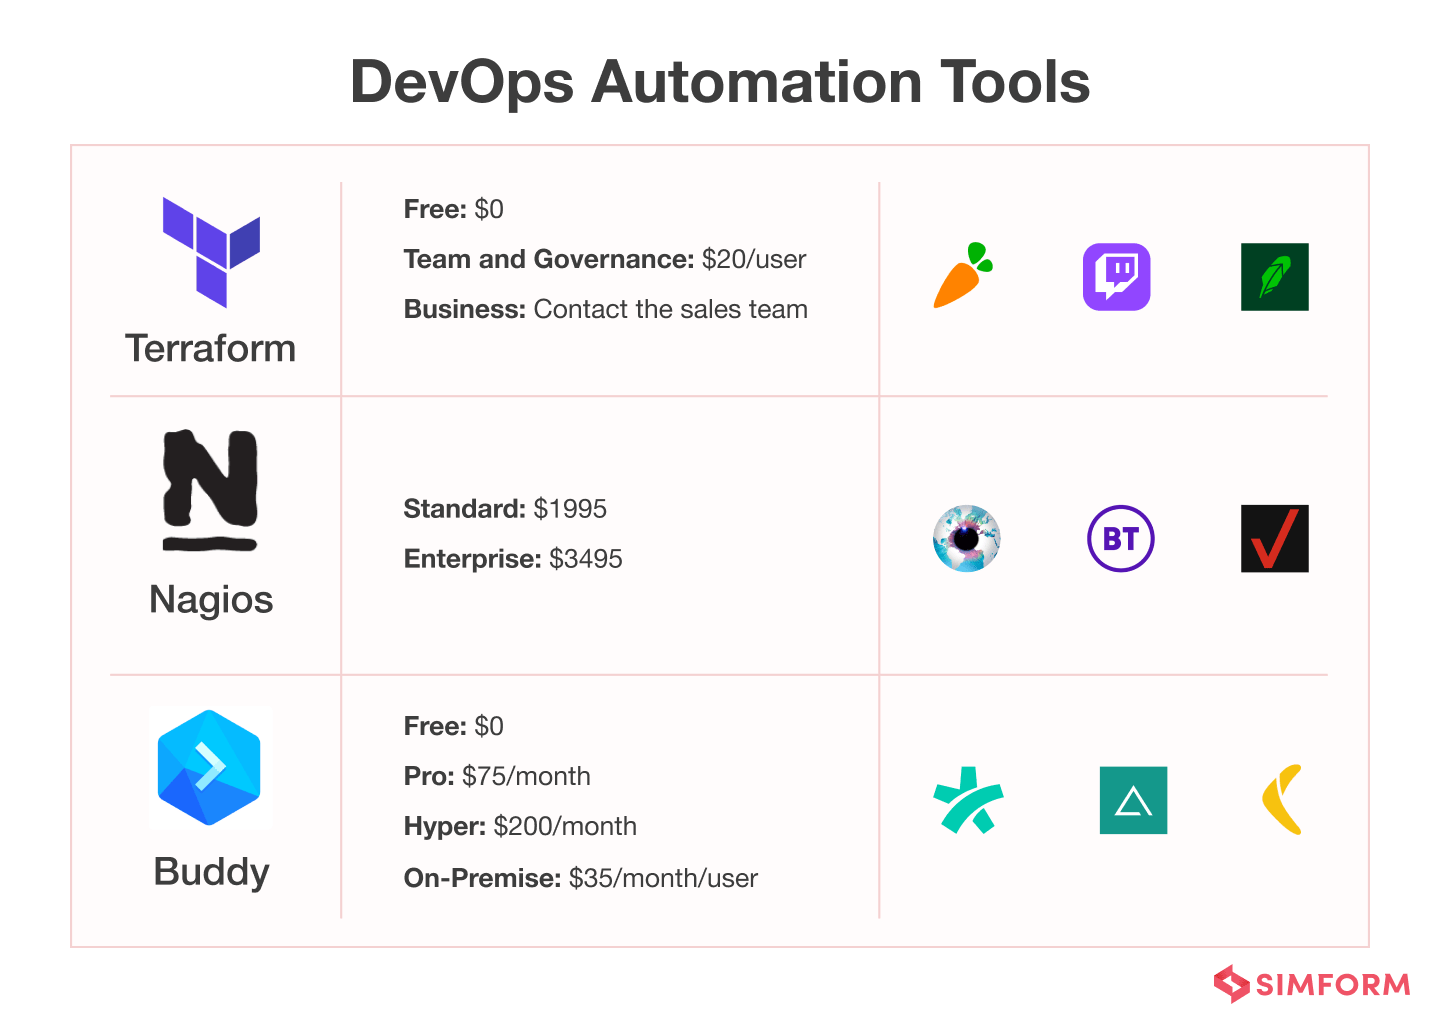 DevOps Automation Tools